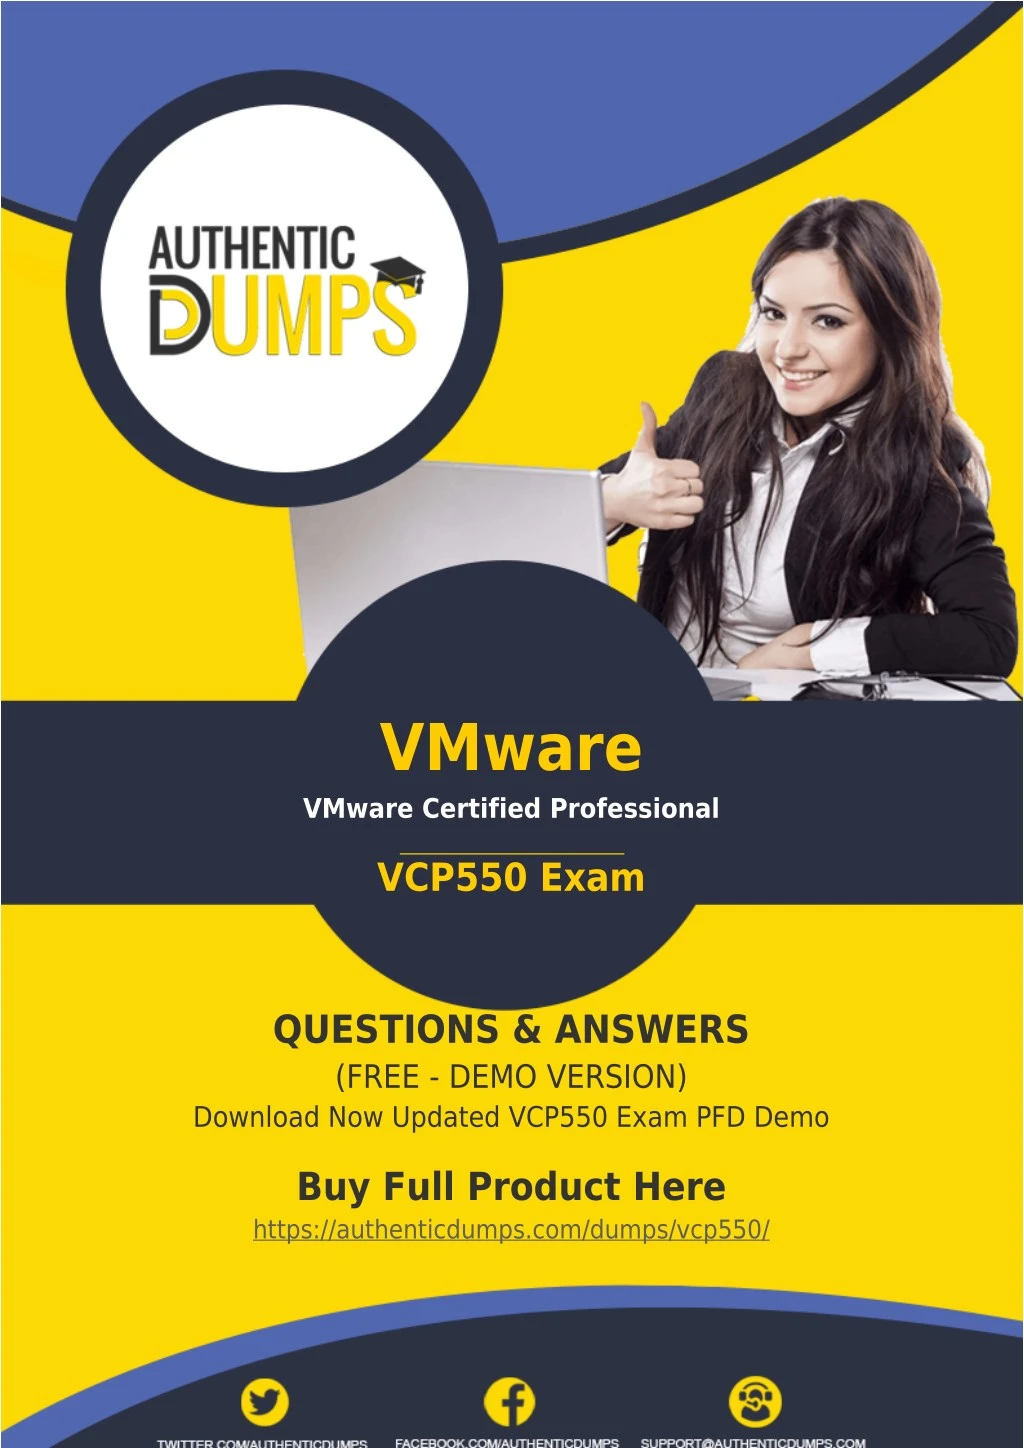 vmware vmware certified professional